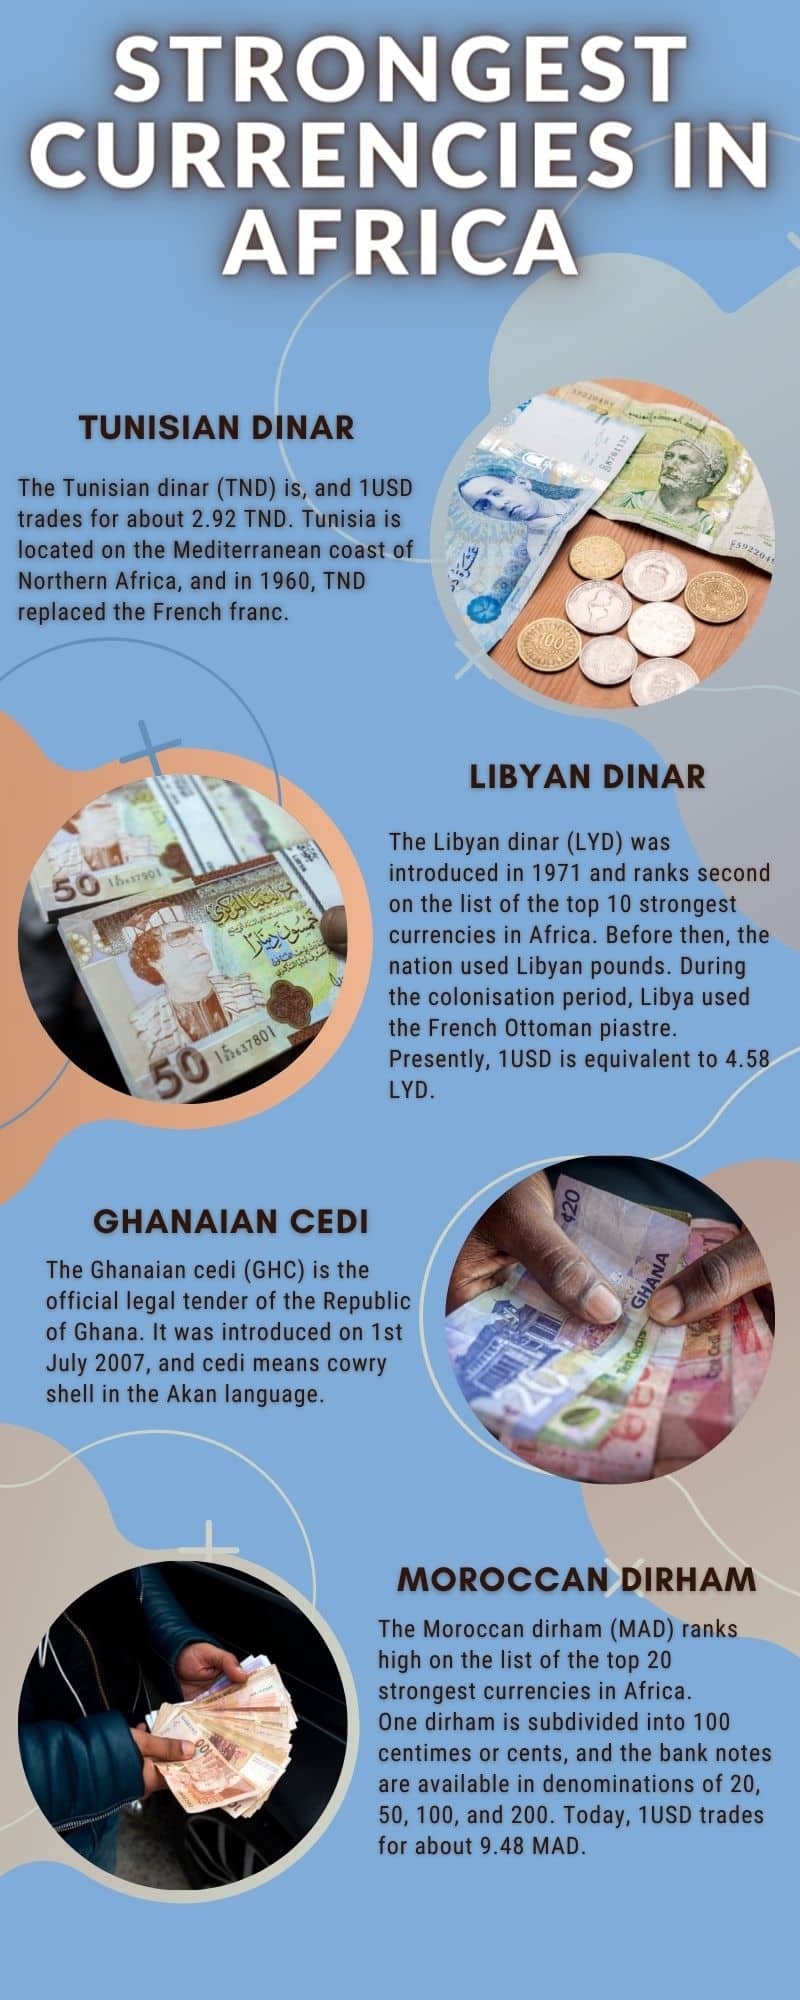 Top 20 strongest currencies in Africa